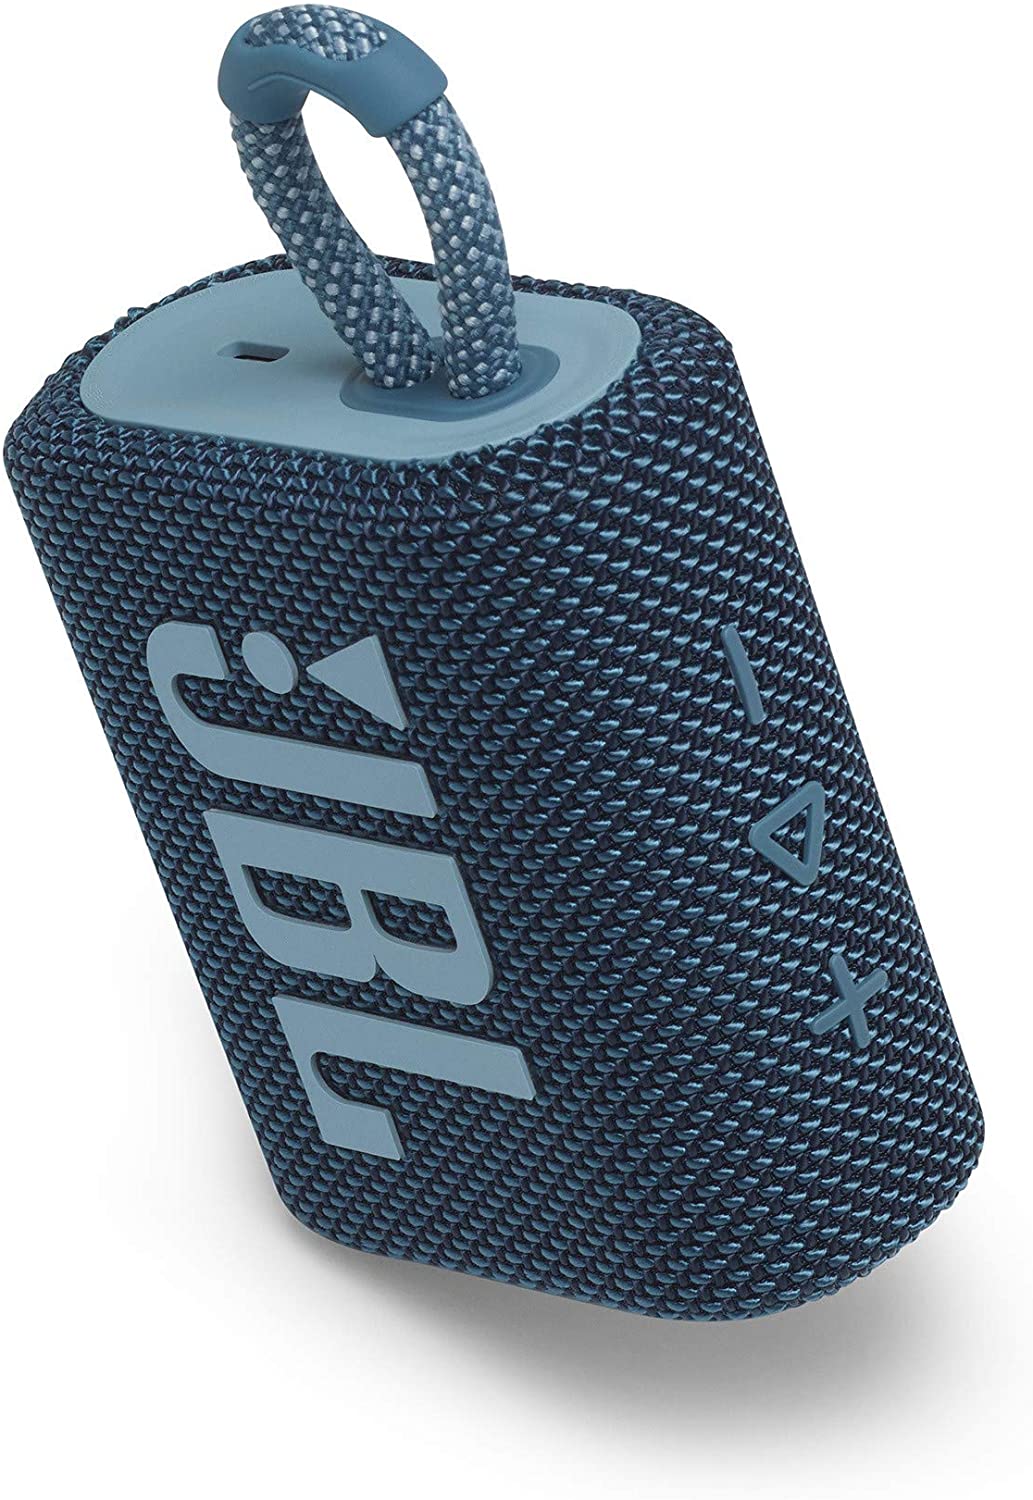 JBL Go 3 Portable Waterproof Bluetooth Speaker, Blue